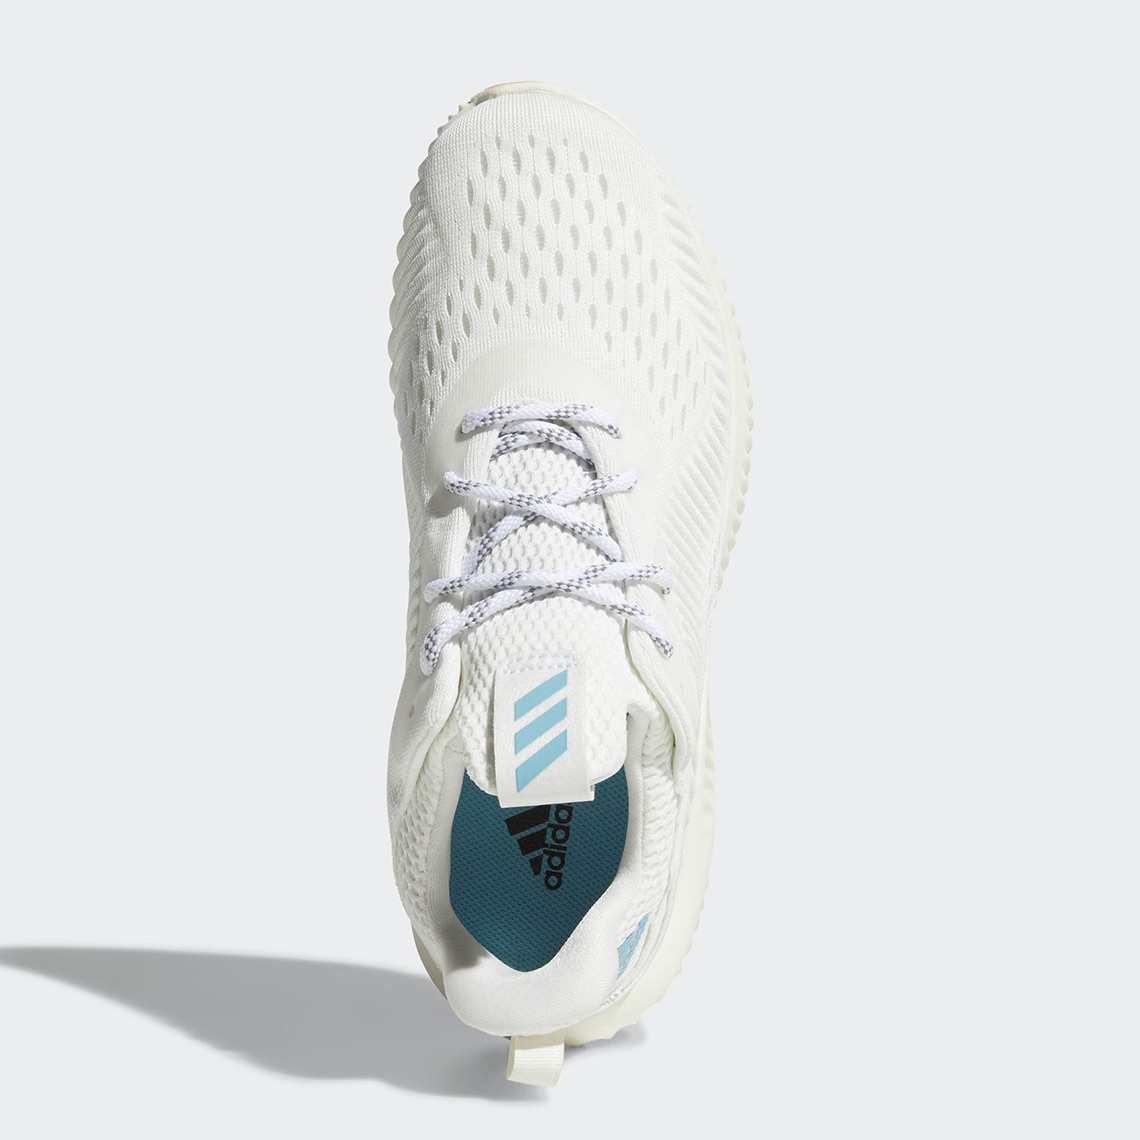 ik klaag eeuwig Baars Parley for the Oceans x adidas Collection Release Info | SneakerNews.com